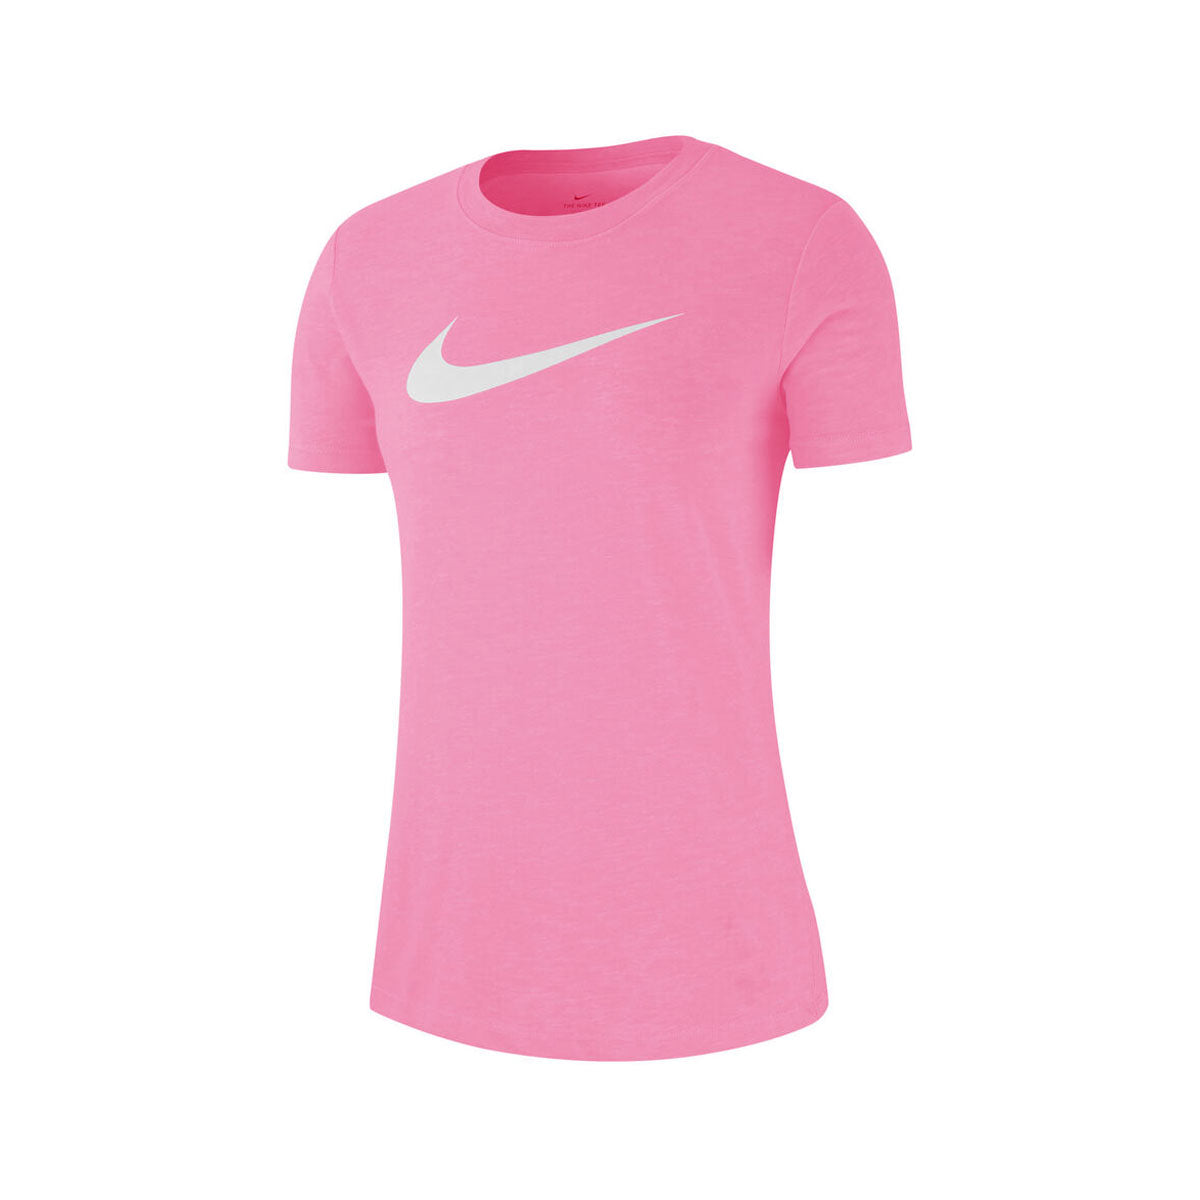 Nike Women's Dri-FIT Training T-Shirt